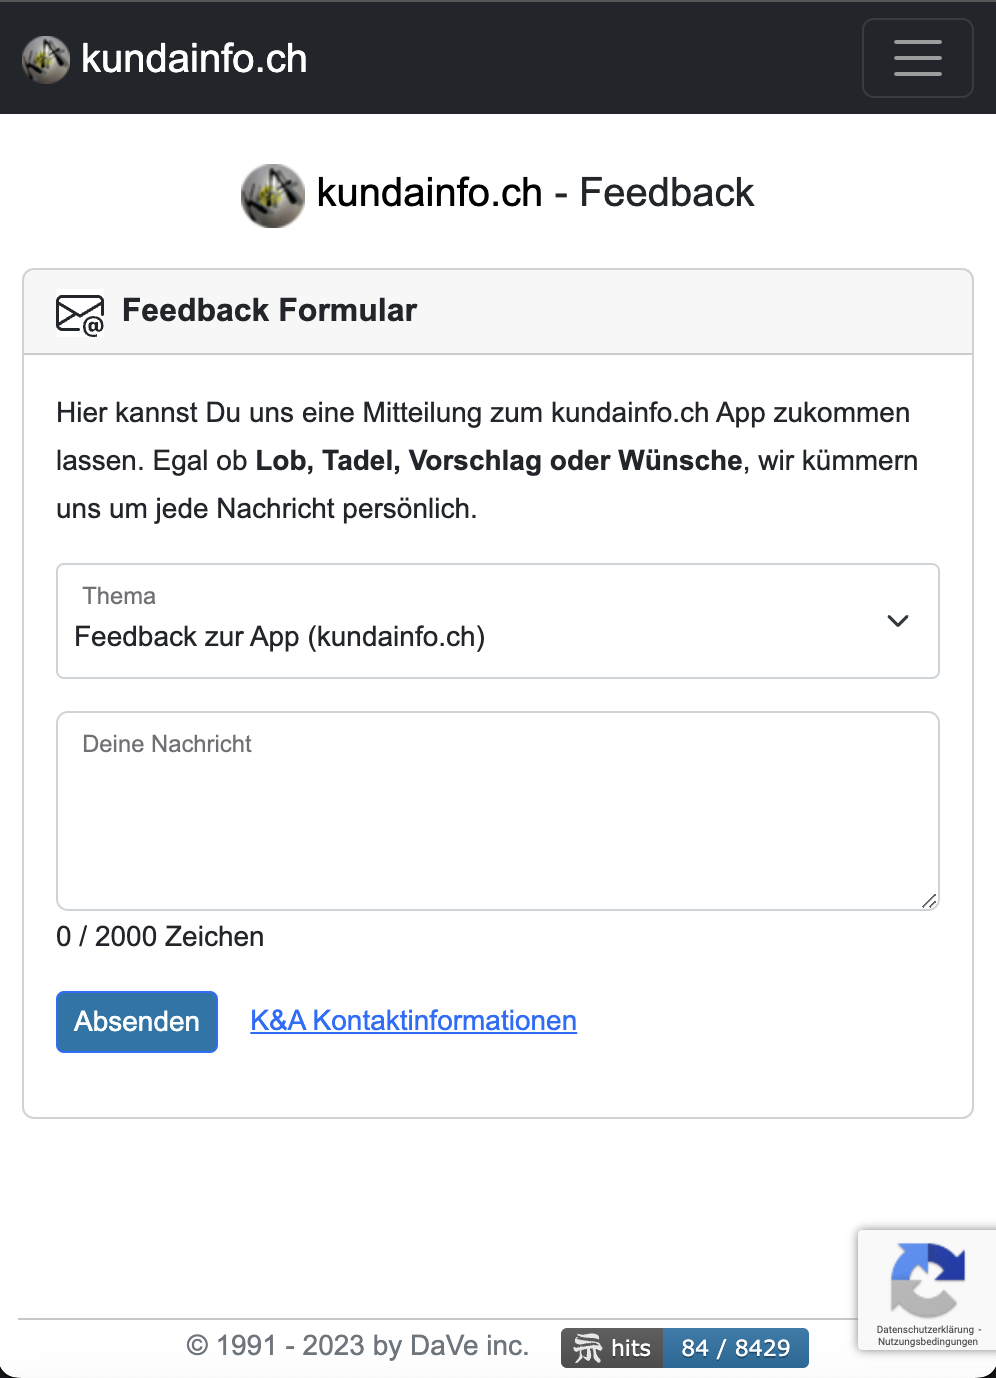 Feedbackpage of kundainfo.ch